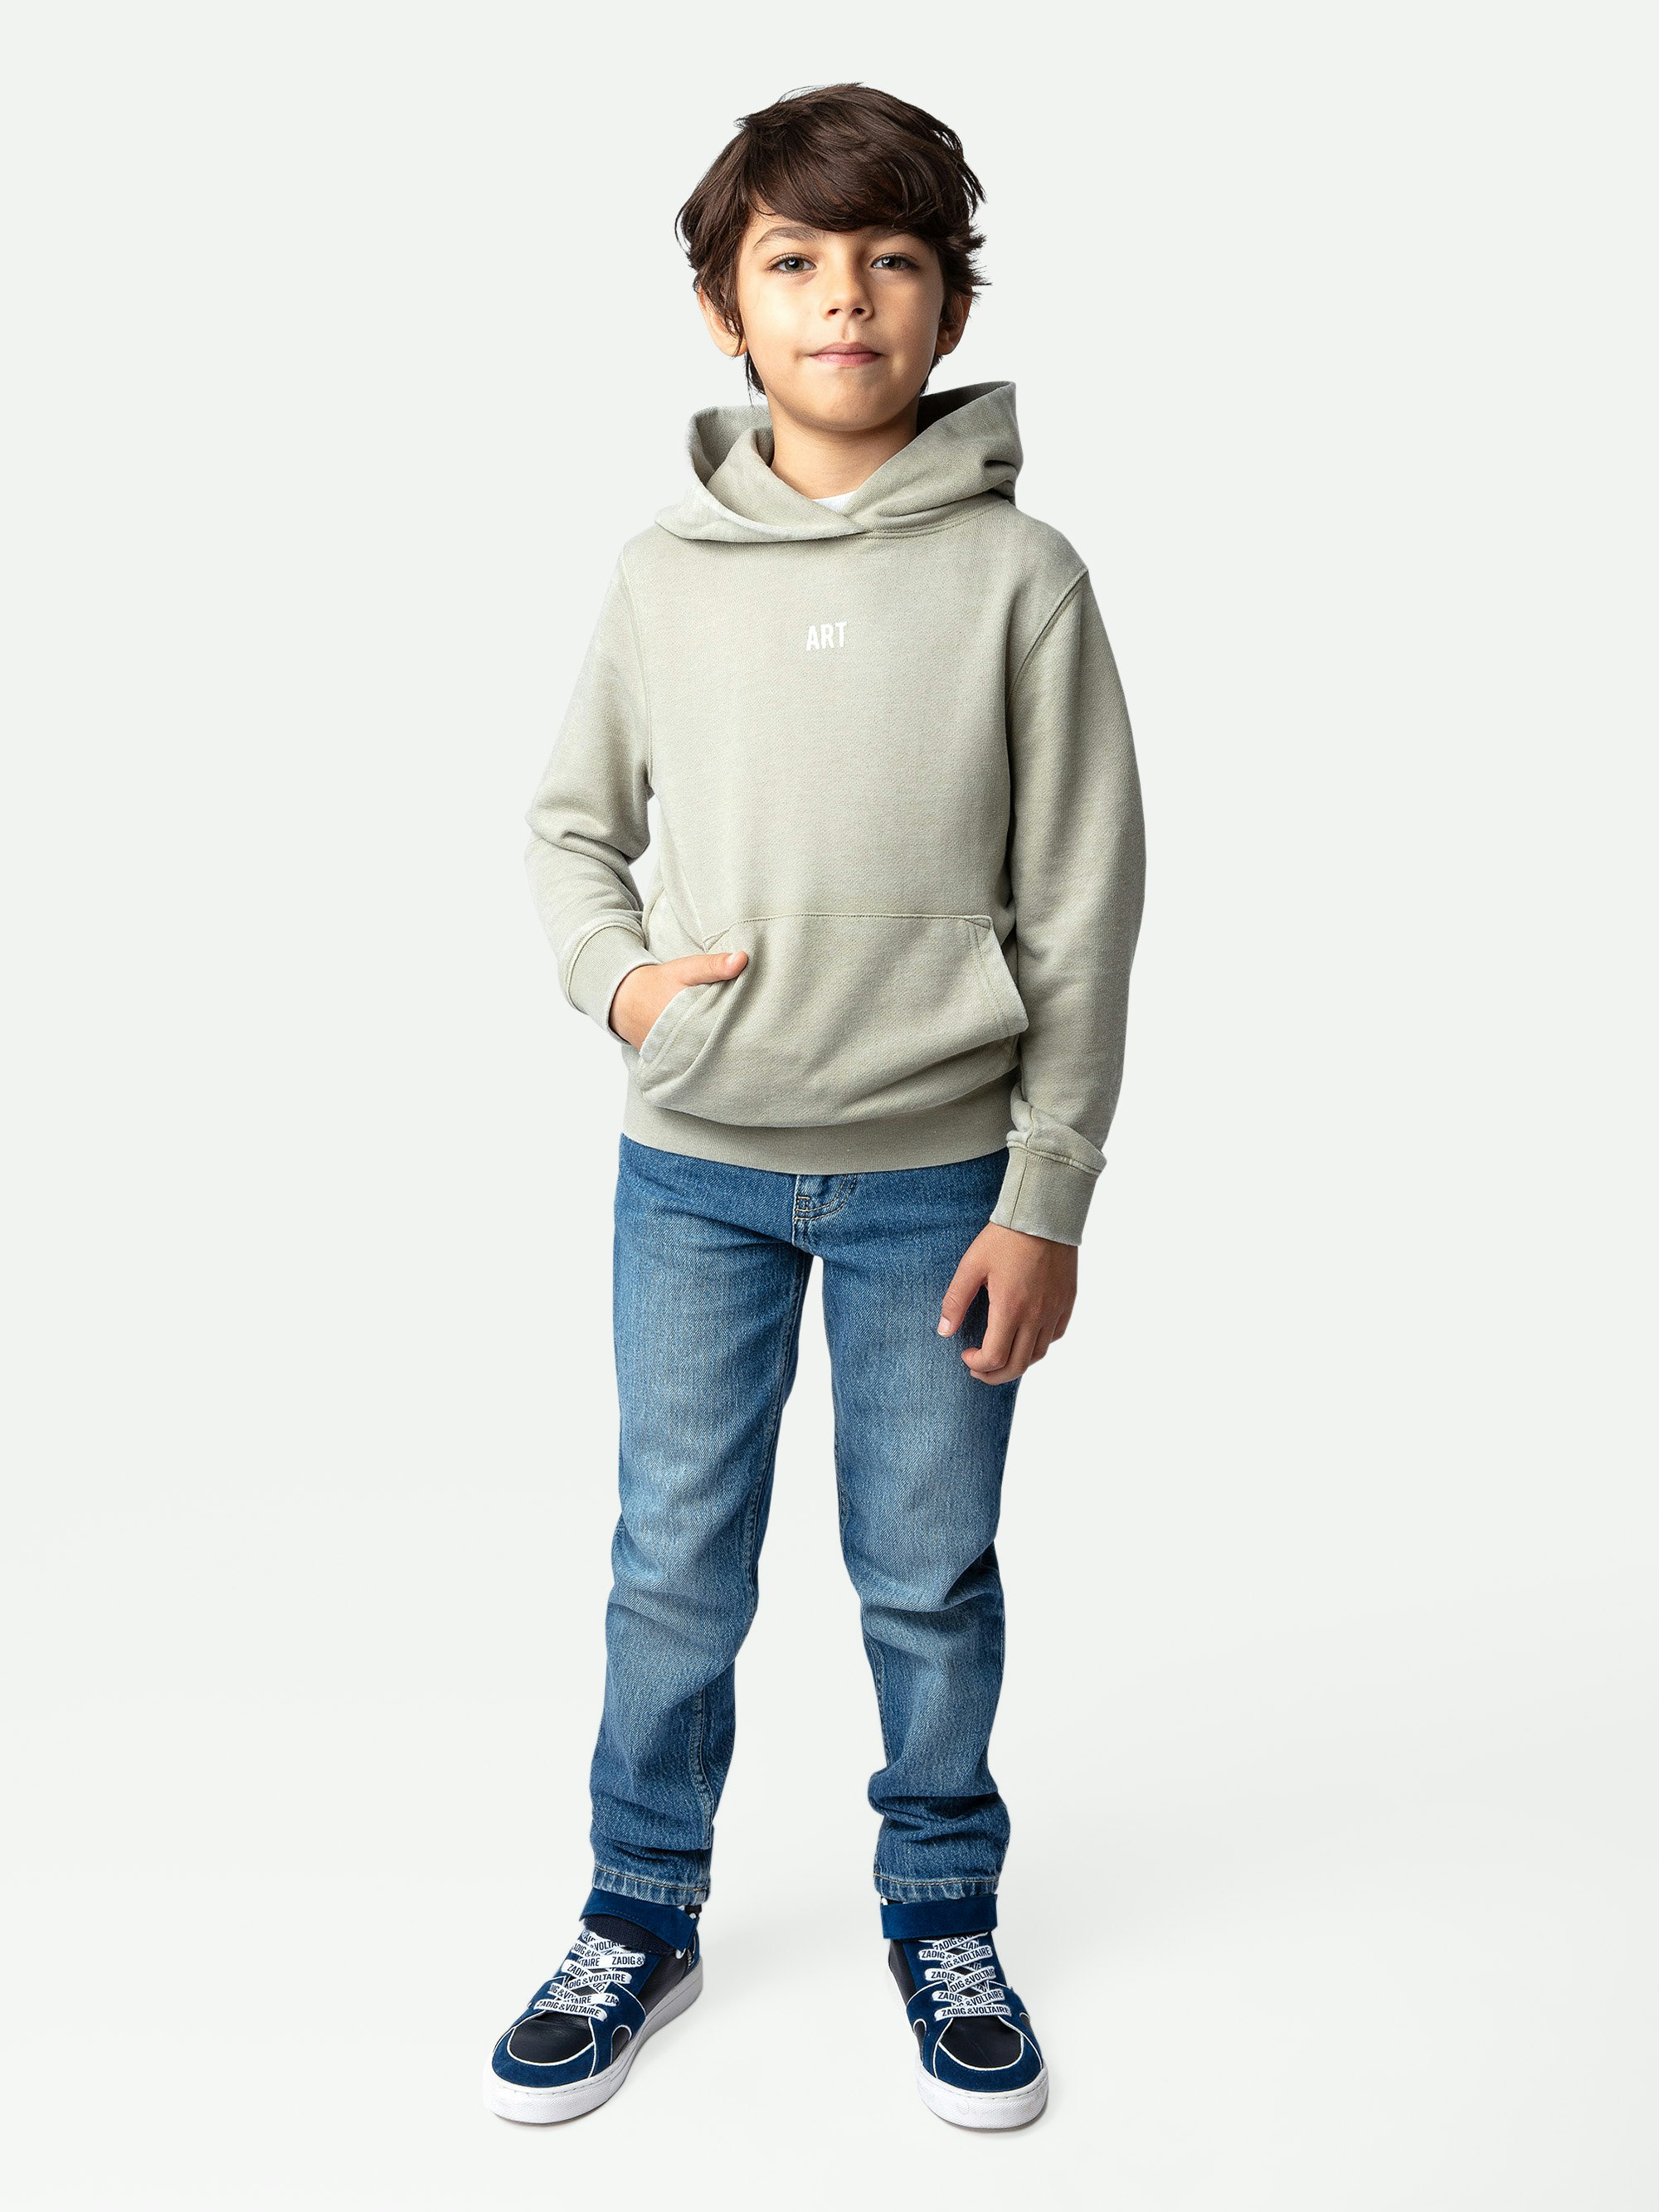 Sanchi Boys’ Photoprint Sweatshirt - Boys’ light khaki fleece hoodie with illustration and photoprint.